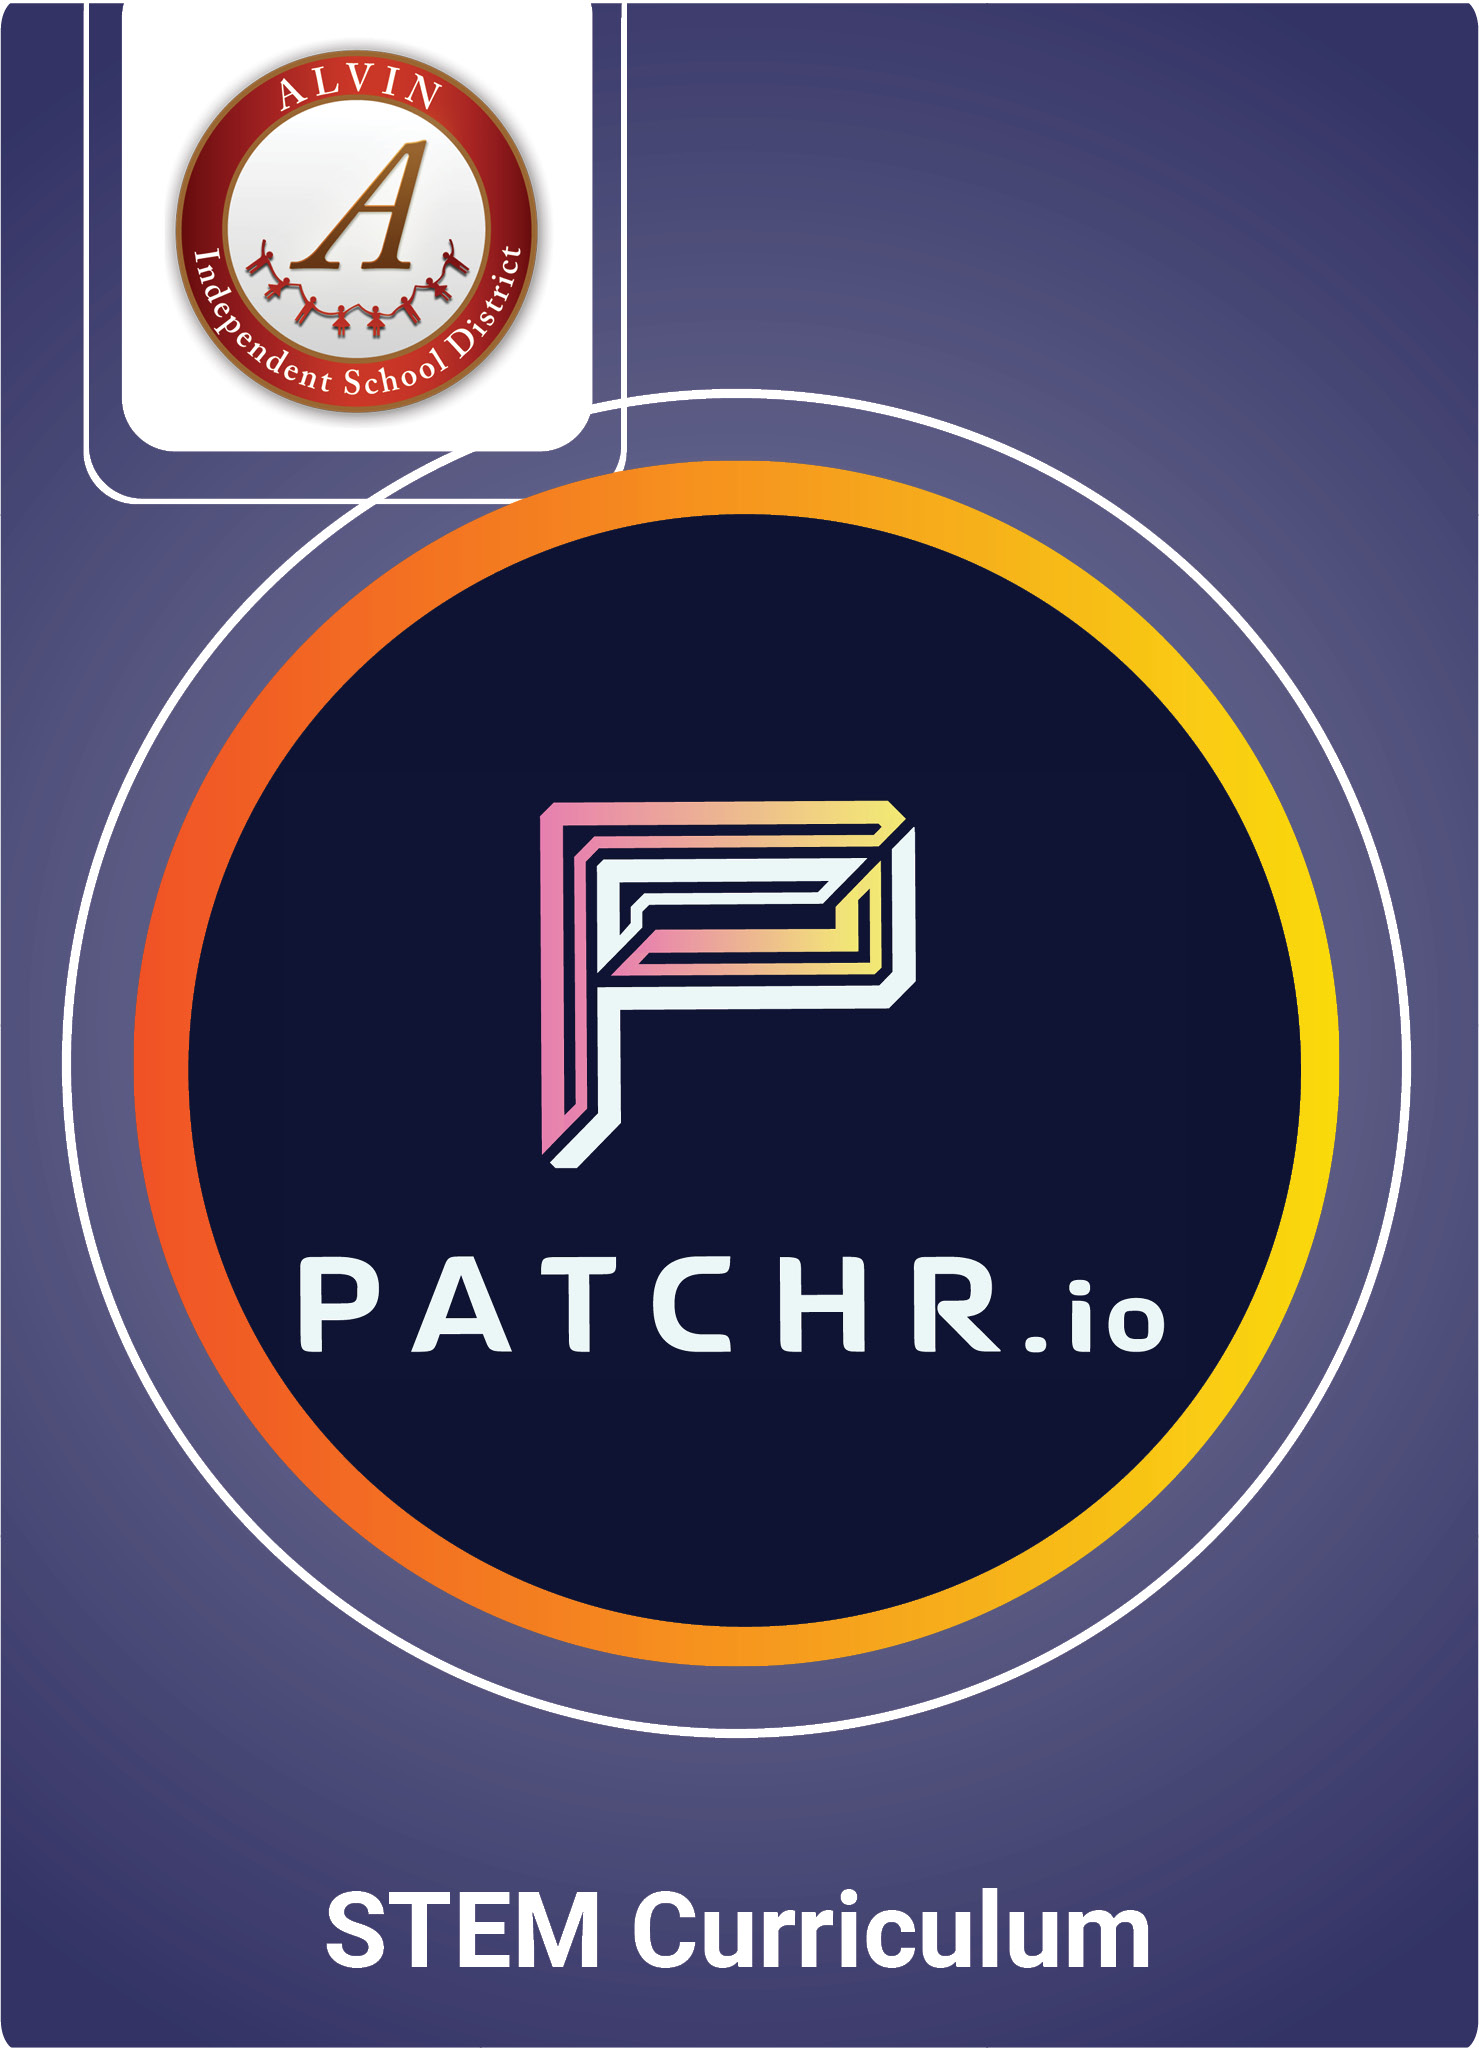 Patchr.io logo